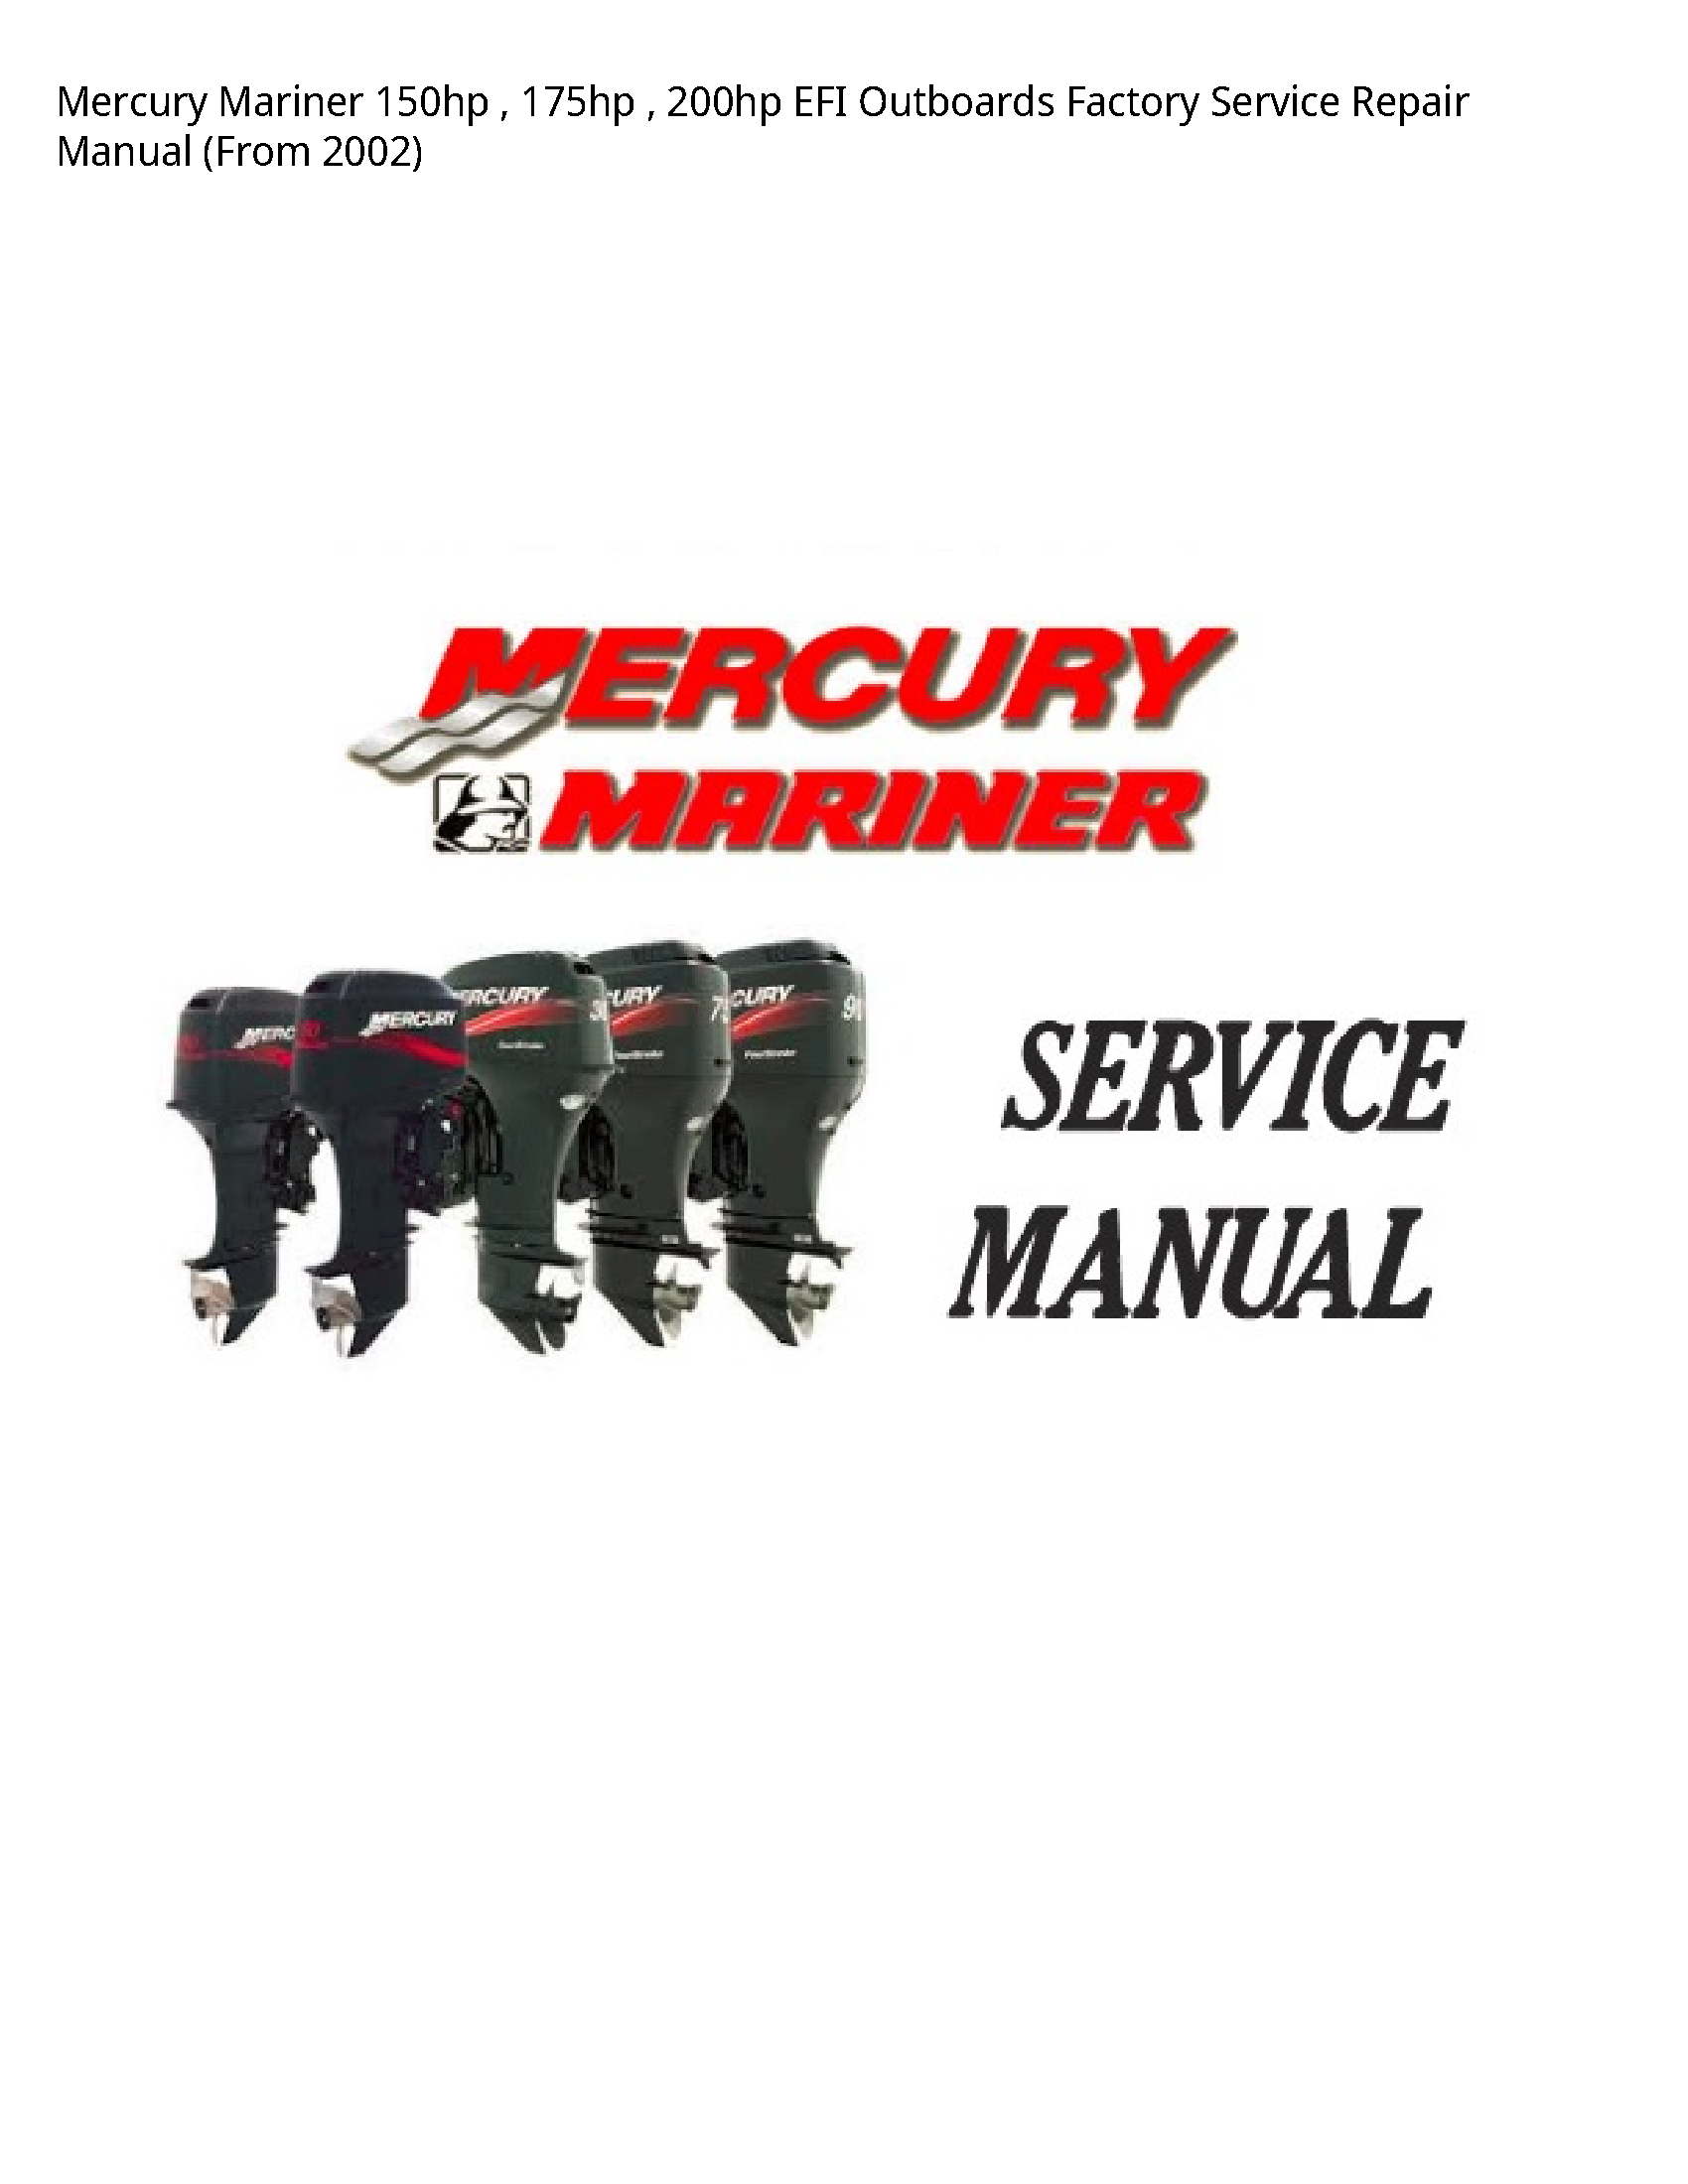 Mercury Mariner 150hp EFI Outboards Factory manual